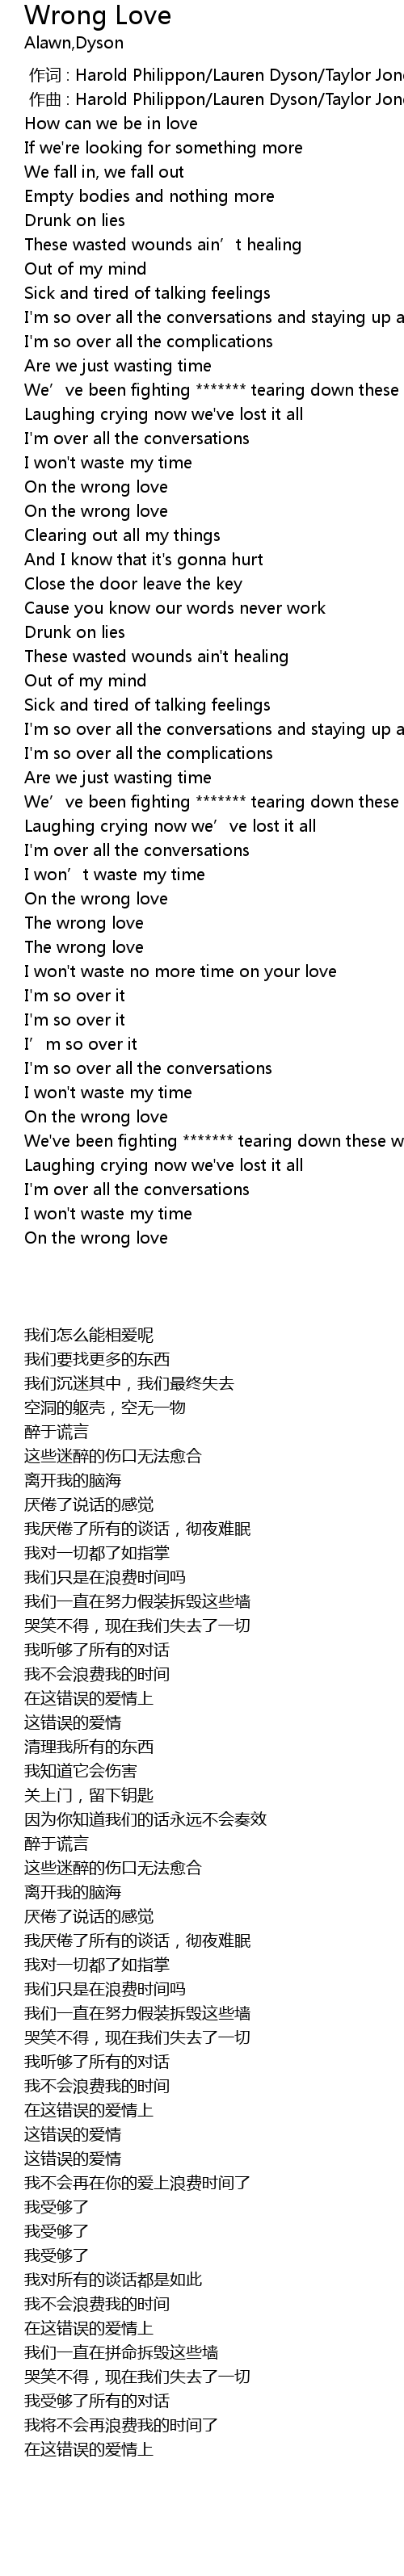 Wrong Love Lyrics